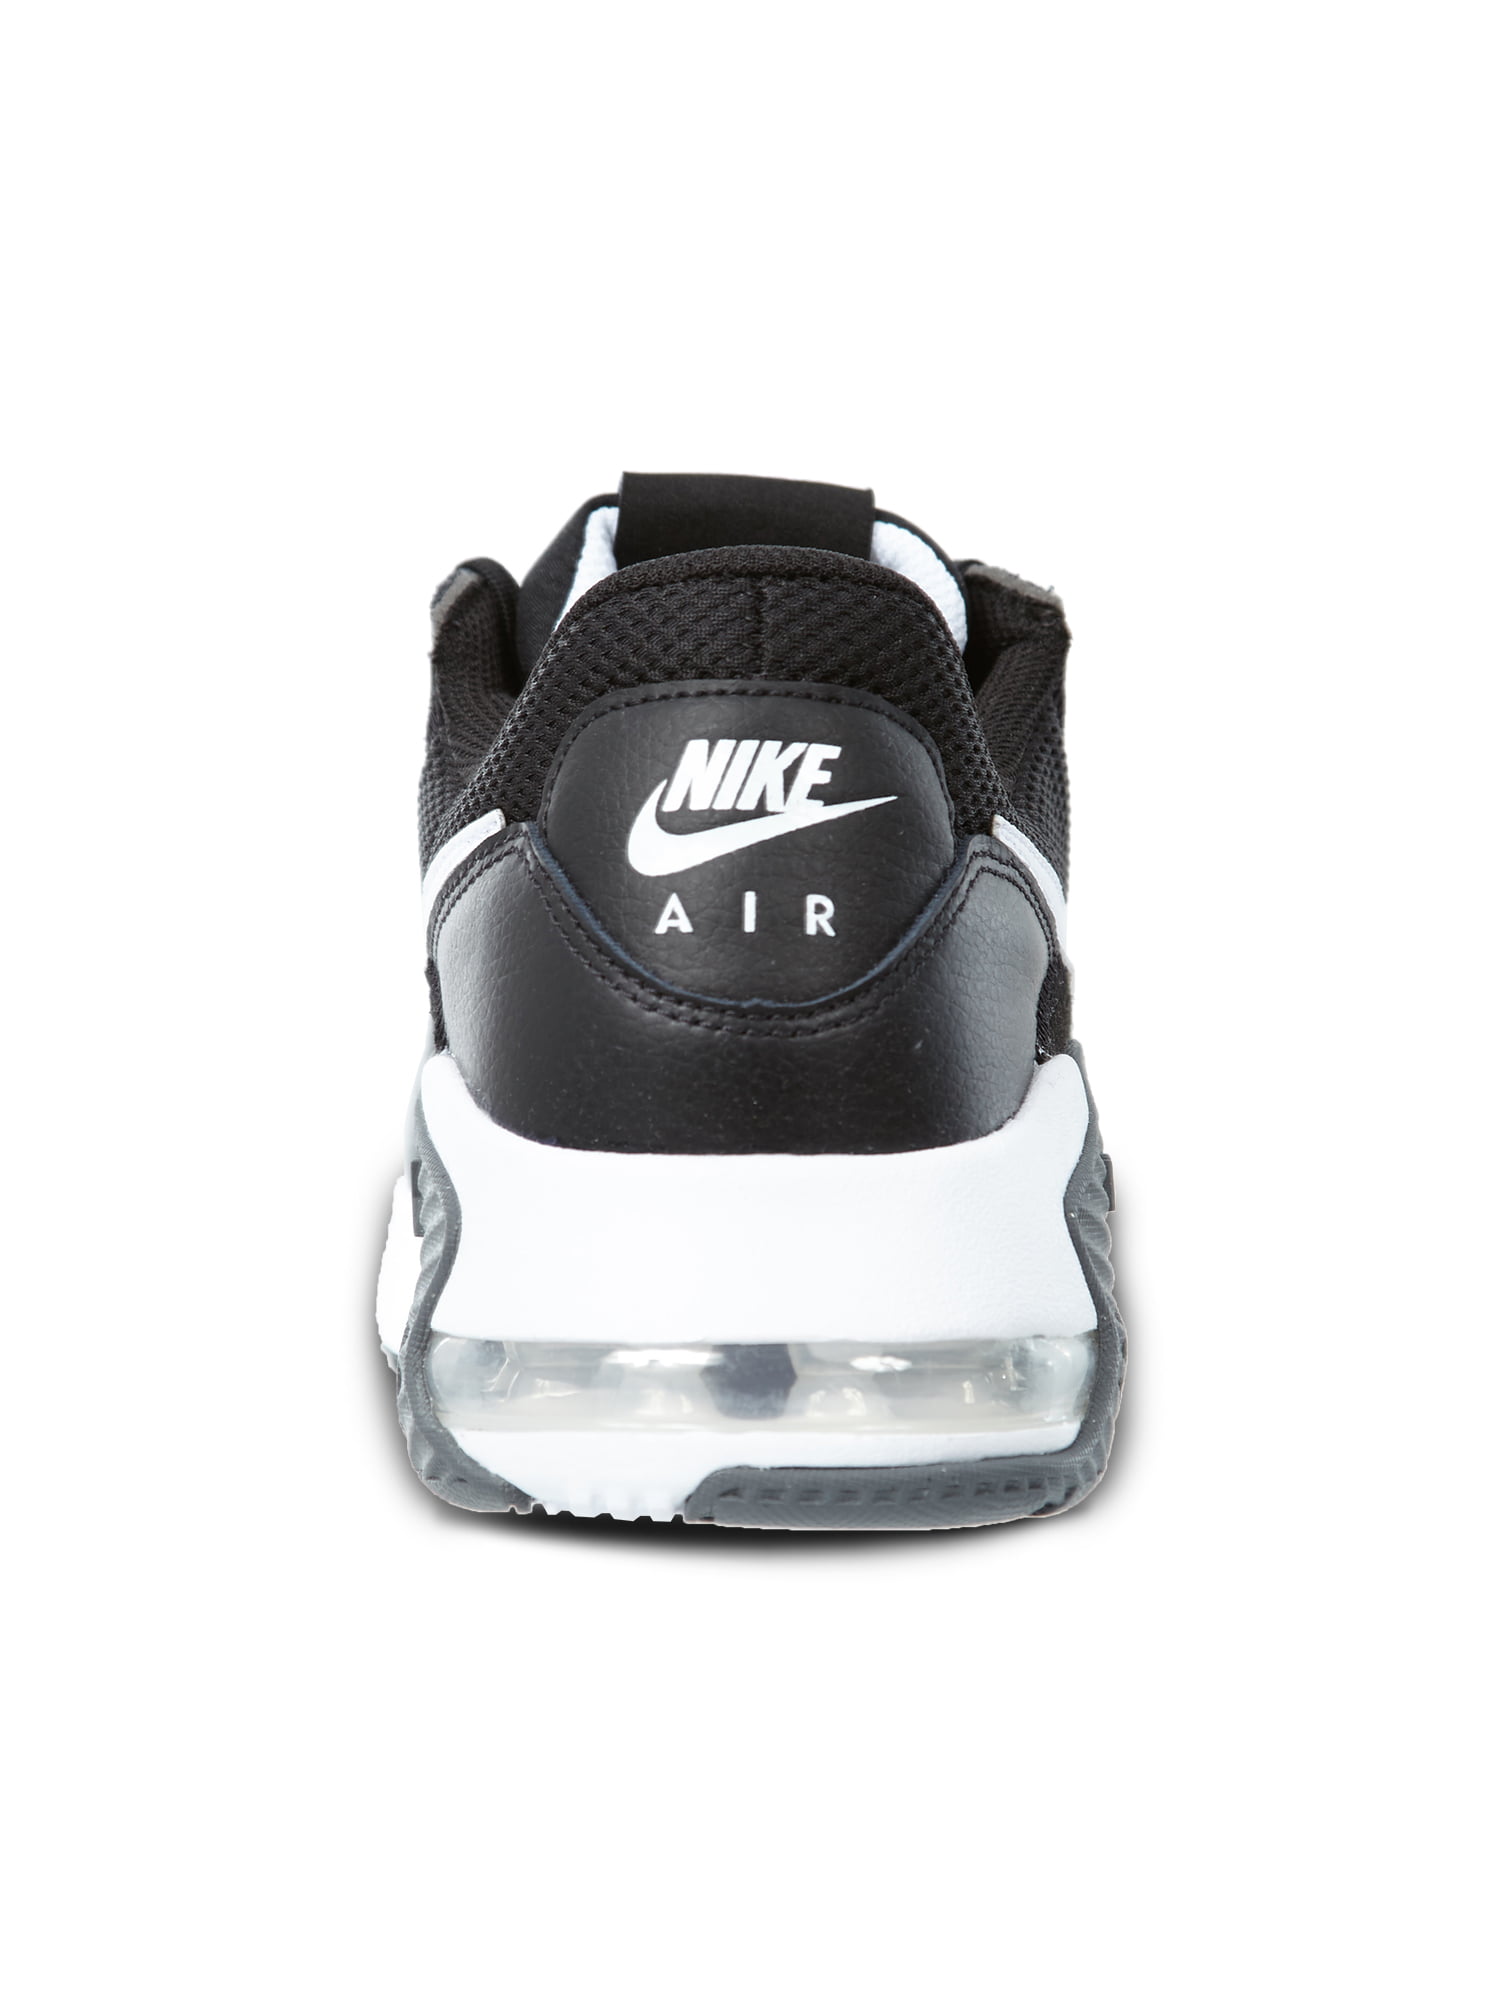 Off White Nike Mens Air Max Excee Sneaker, Athletic & Sneakers